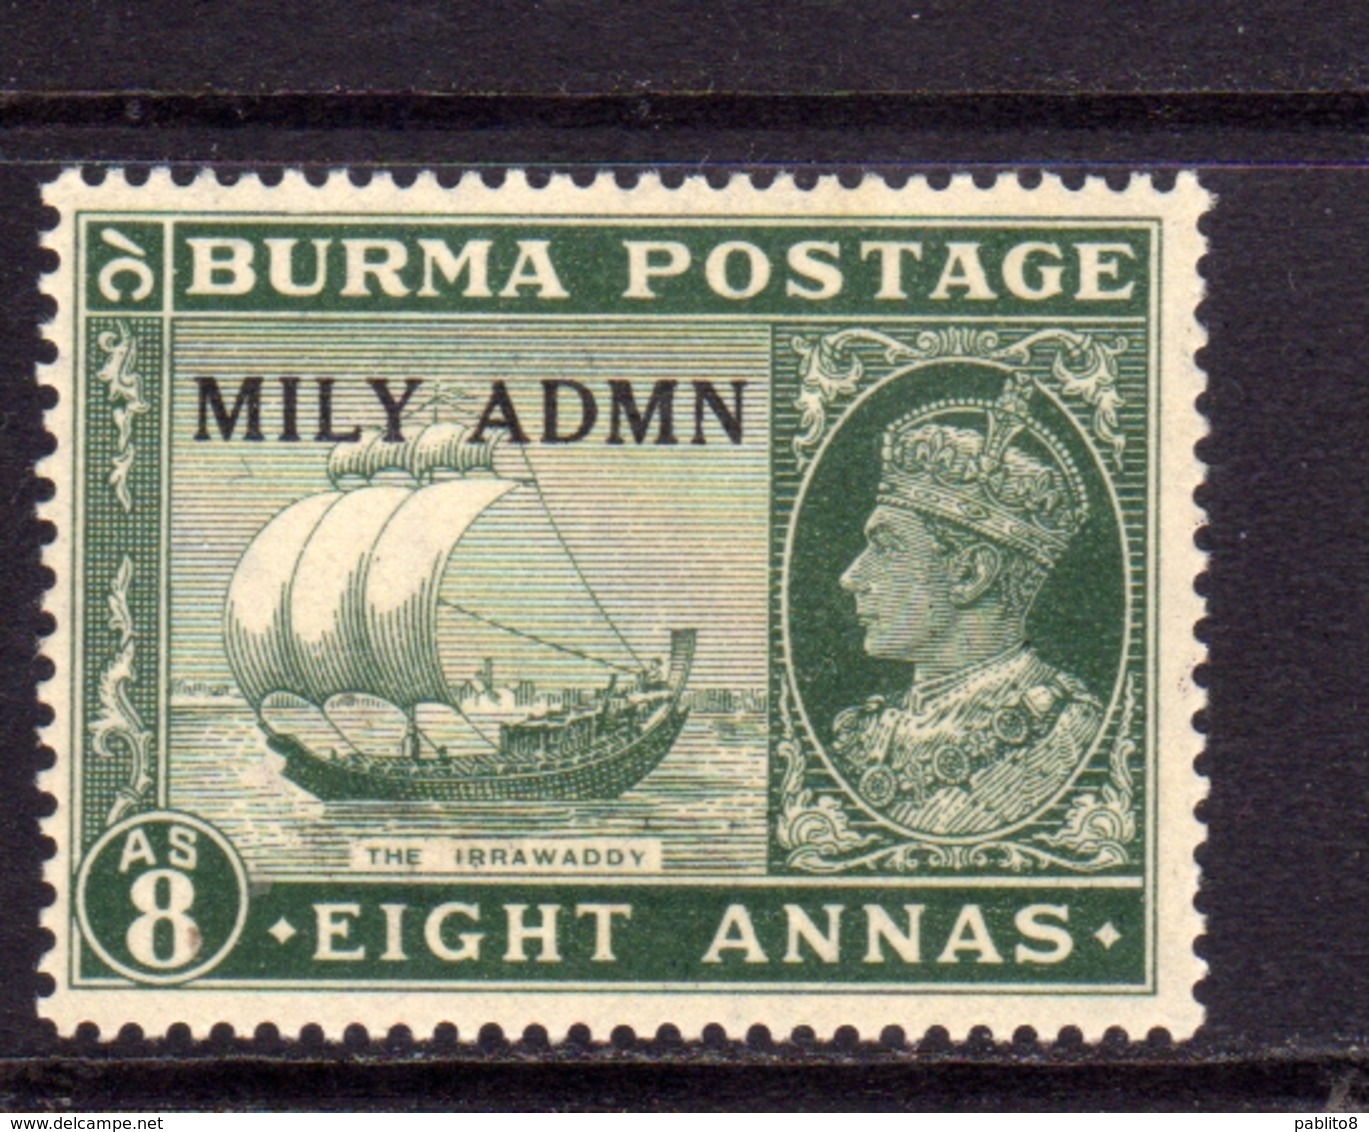 BURMA BIRMANIA BIRMANIE MYANMAR 1945 KING GEORGE VI RE GIORGIO SOPRASTAMPATO MILY ADMN OVERPRINTED 8a MLH - Birmania (...-1947)